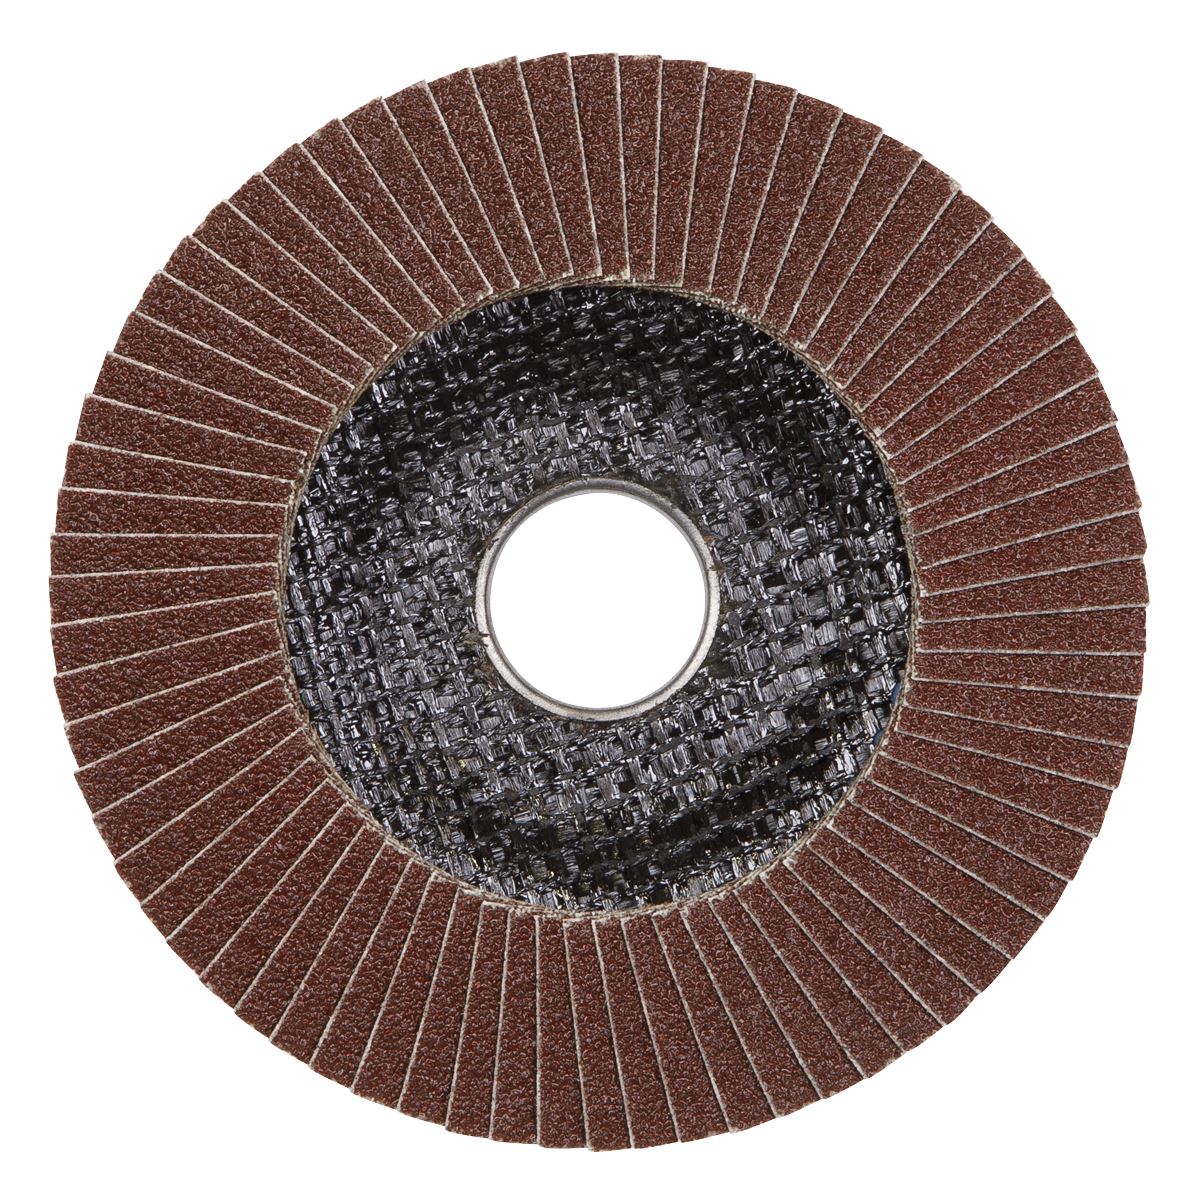 Sealey Flap Disc Aluminium Oxide Ø125mm Ø22mm Bore 80Grit